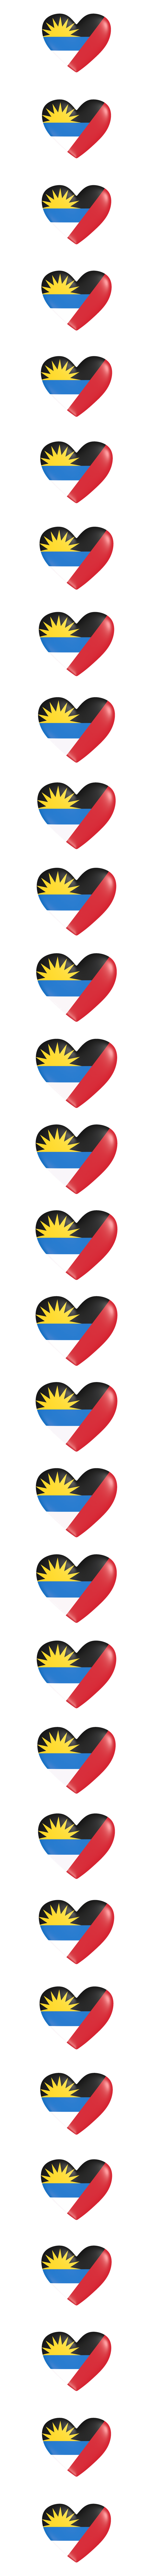 Antigua and Barbuda heart